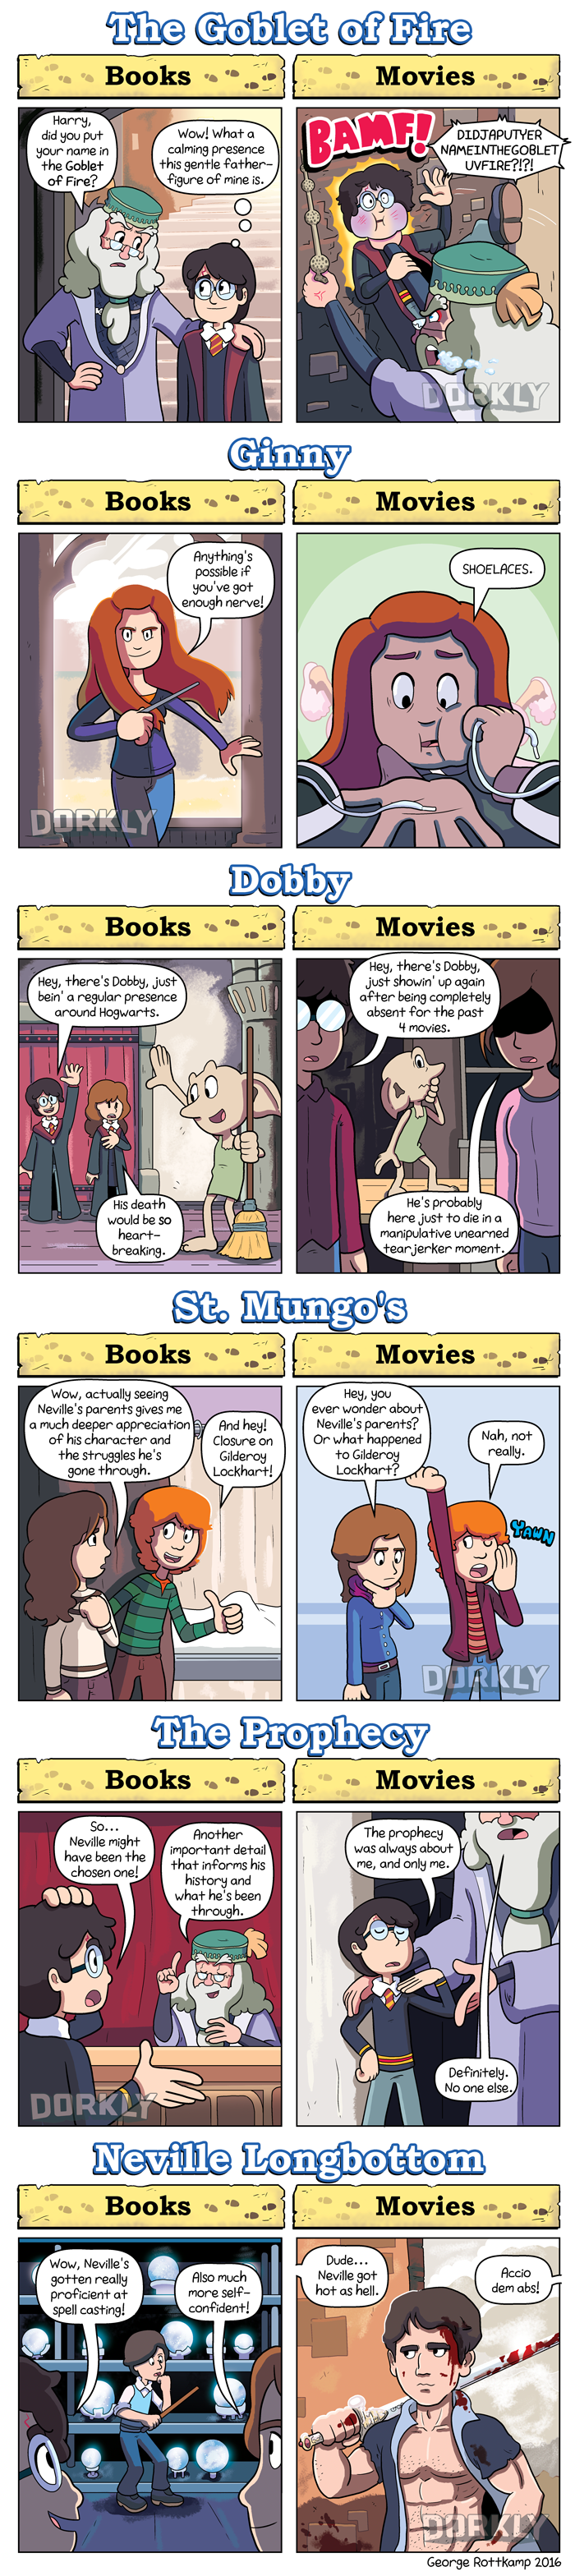 DORKLY: Harry Potter Books vs. Movies 2 by GeorgeRottkamp on DeviantArt